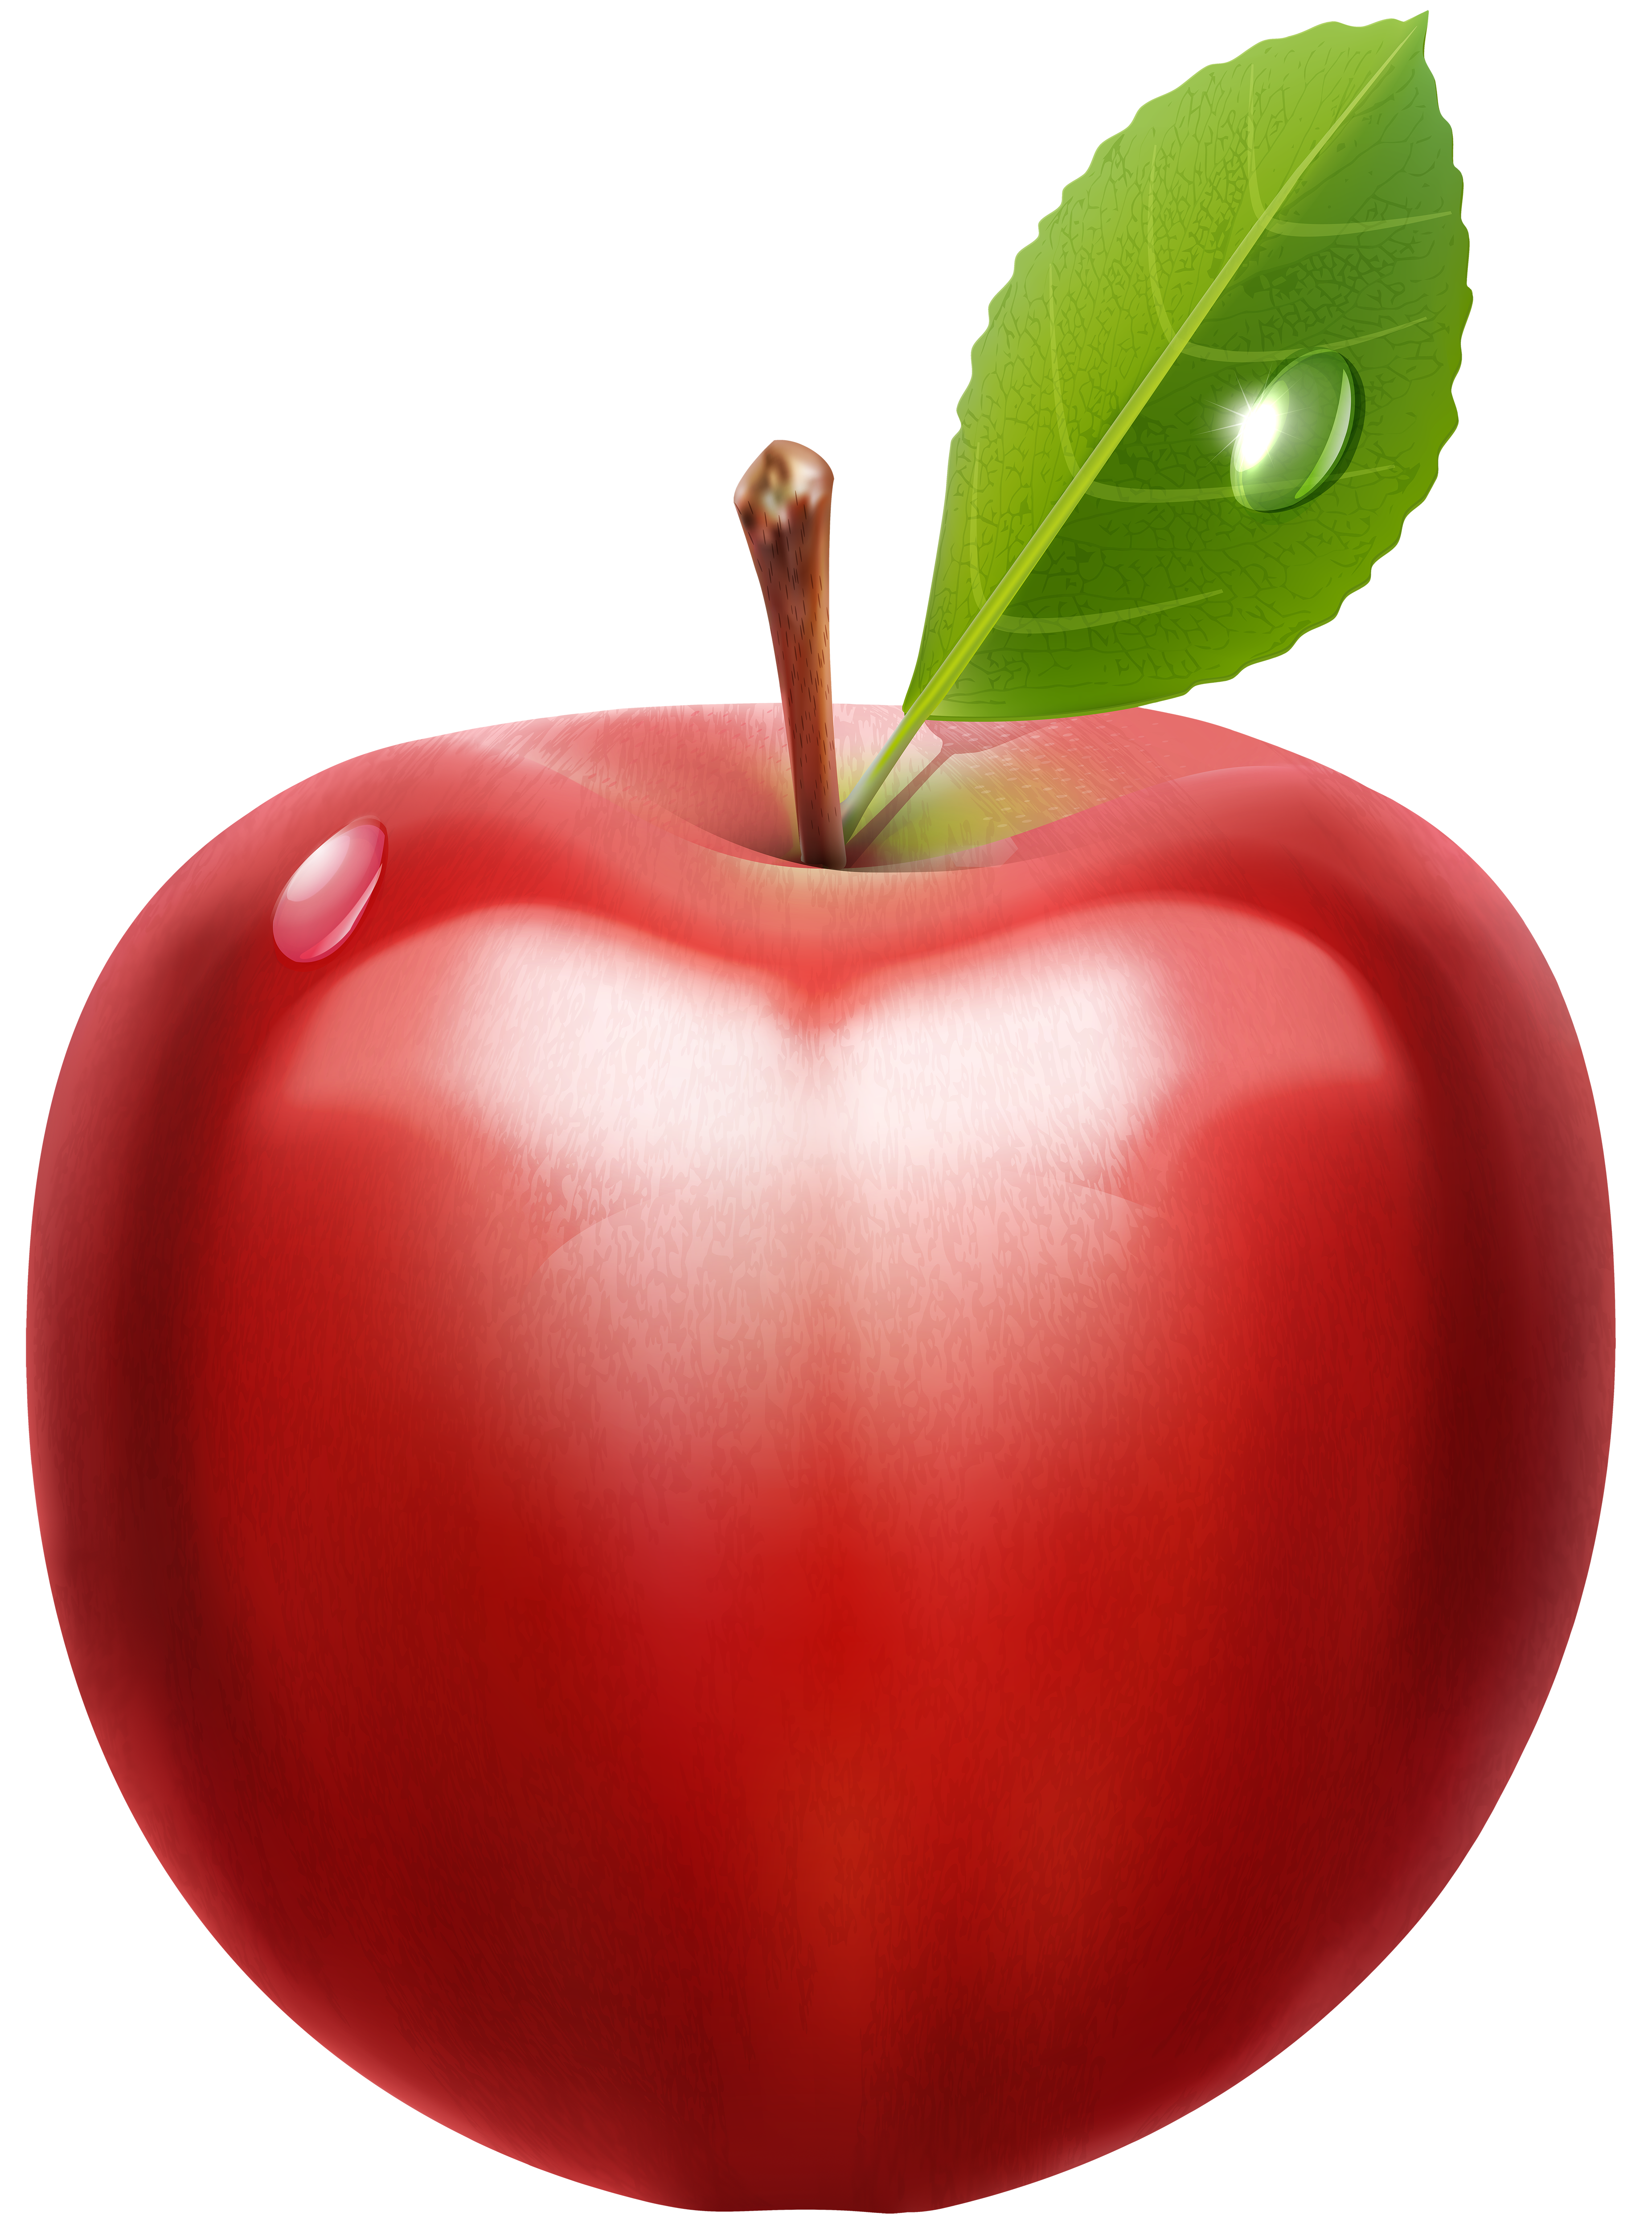 clip art apples